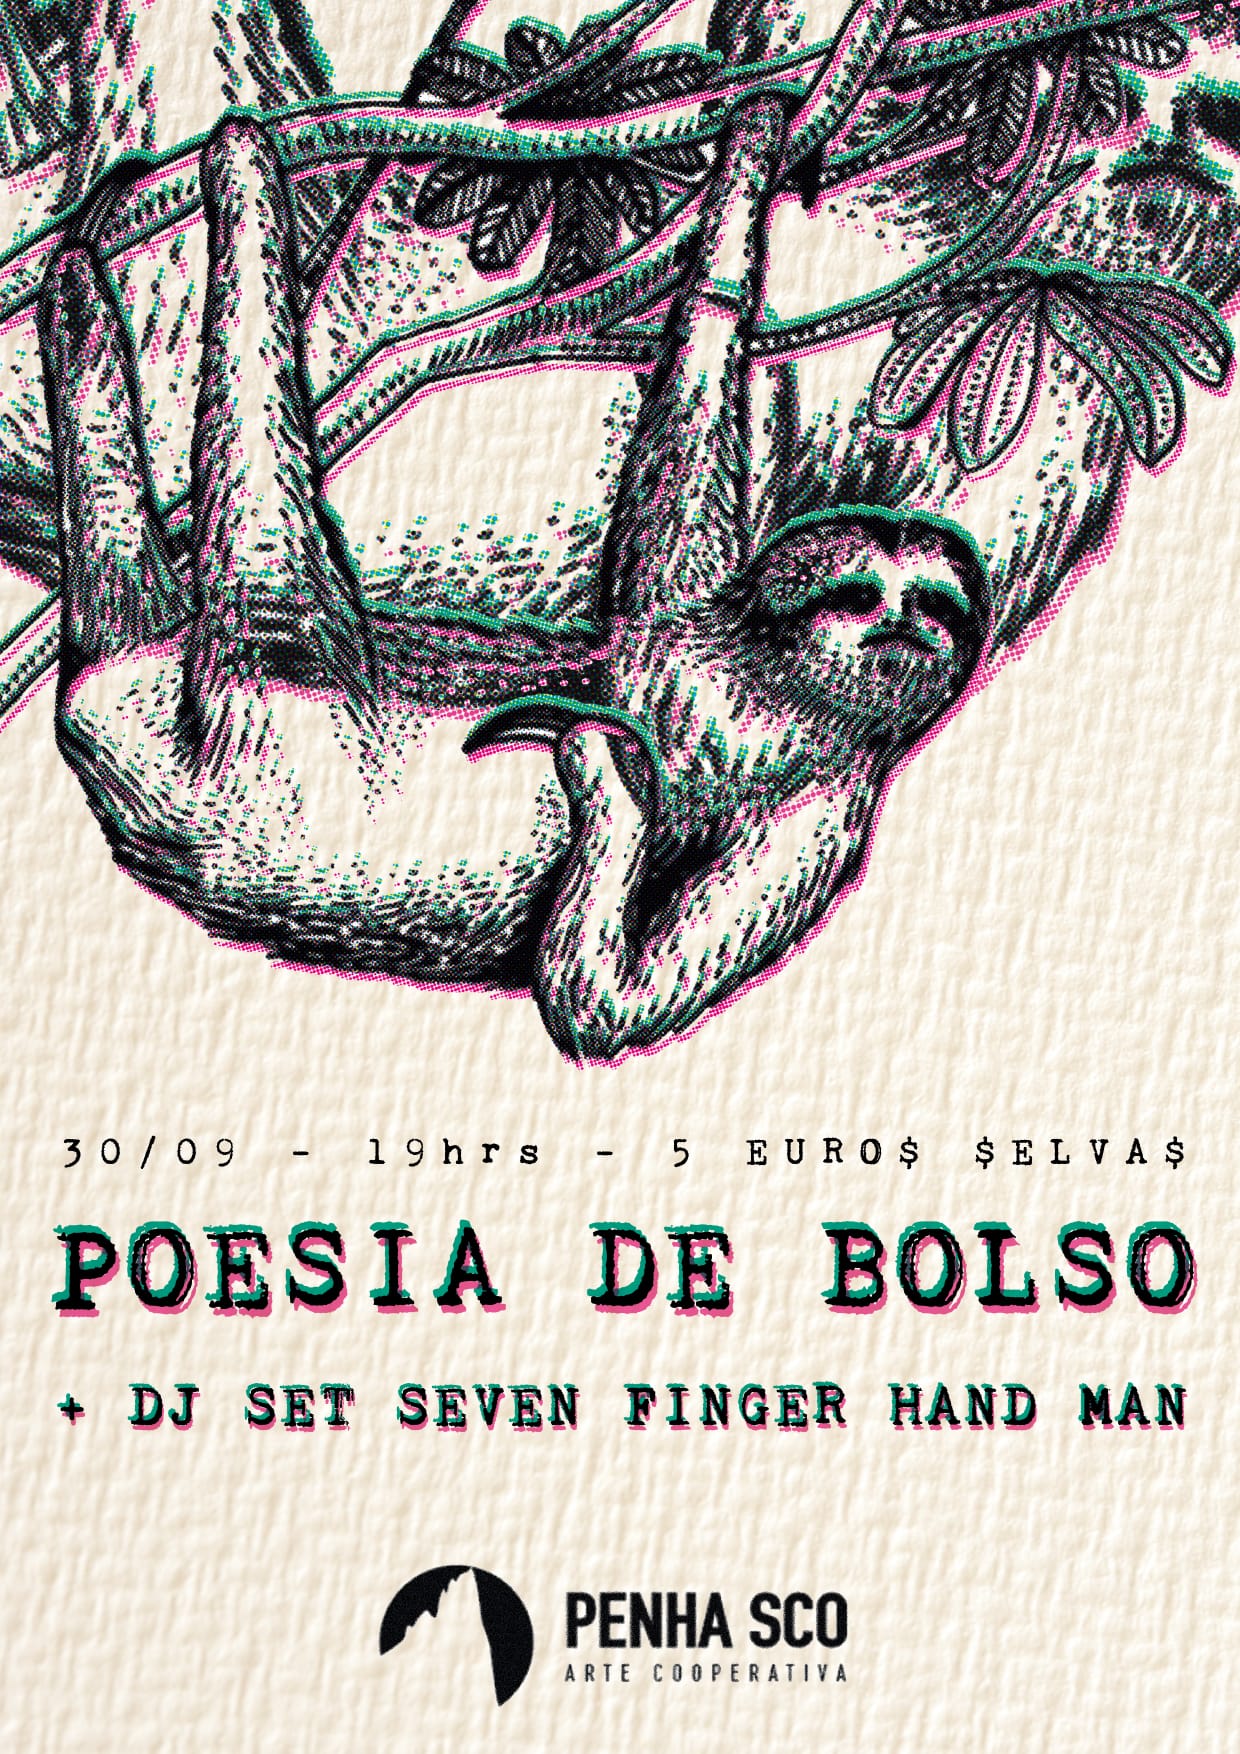 POESIA DE BOLSO + Seven Finger Hand Man DJ Set